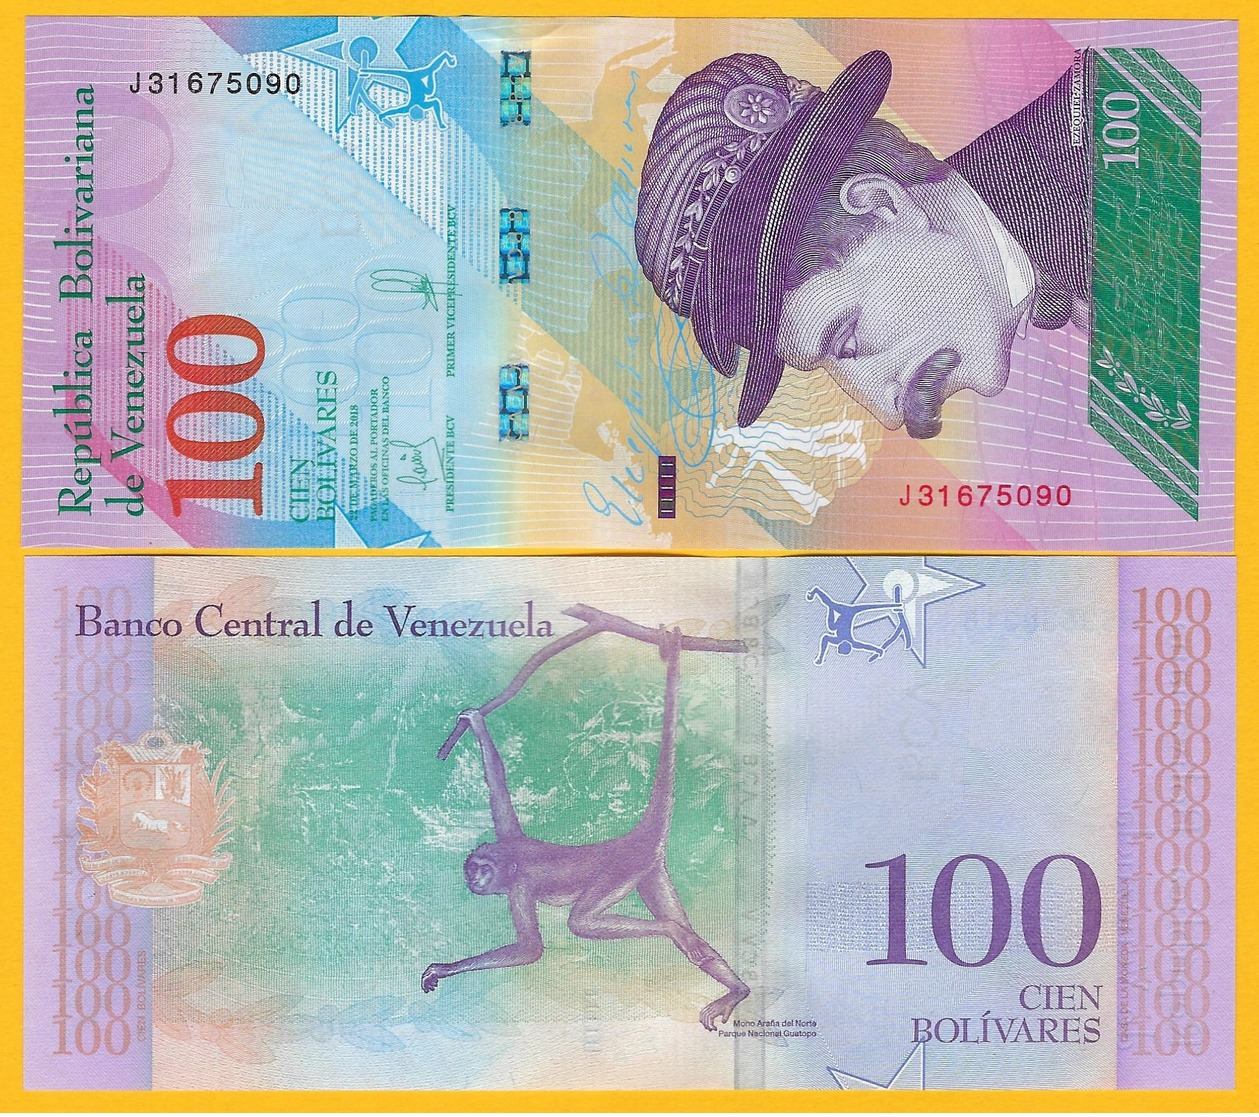 Venezuela 100 Bolivares P-106 2018 (22.03.2018) UNC Banknote - Venezuela